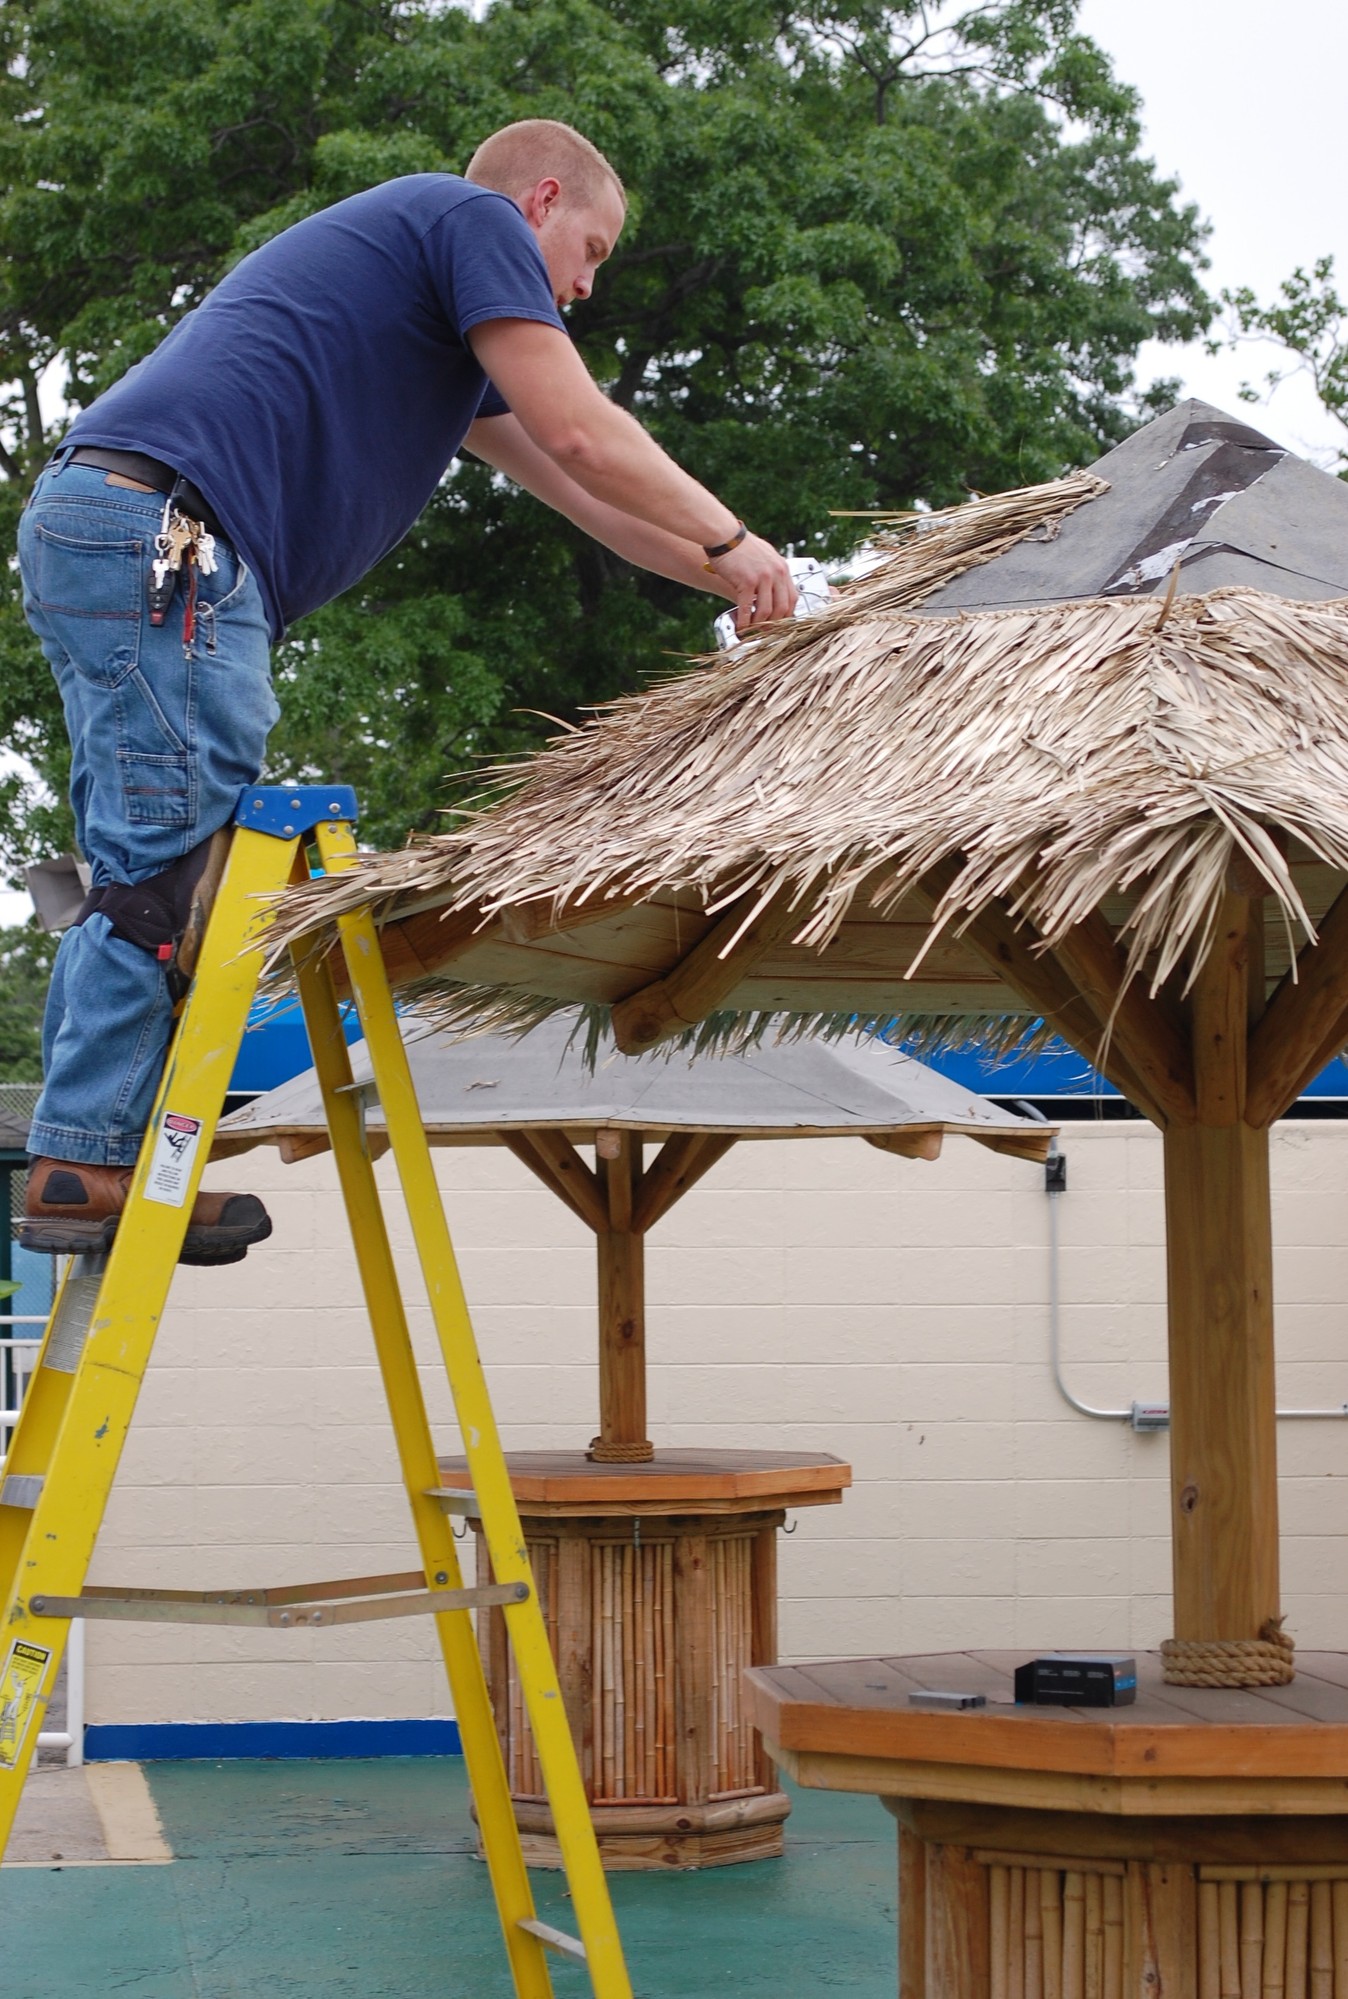 Chris Sottile got the tiki huts ready for the 2014 pool season.